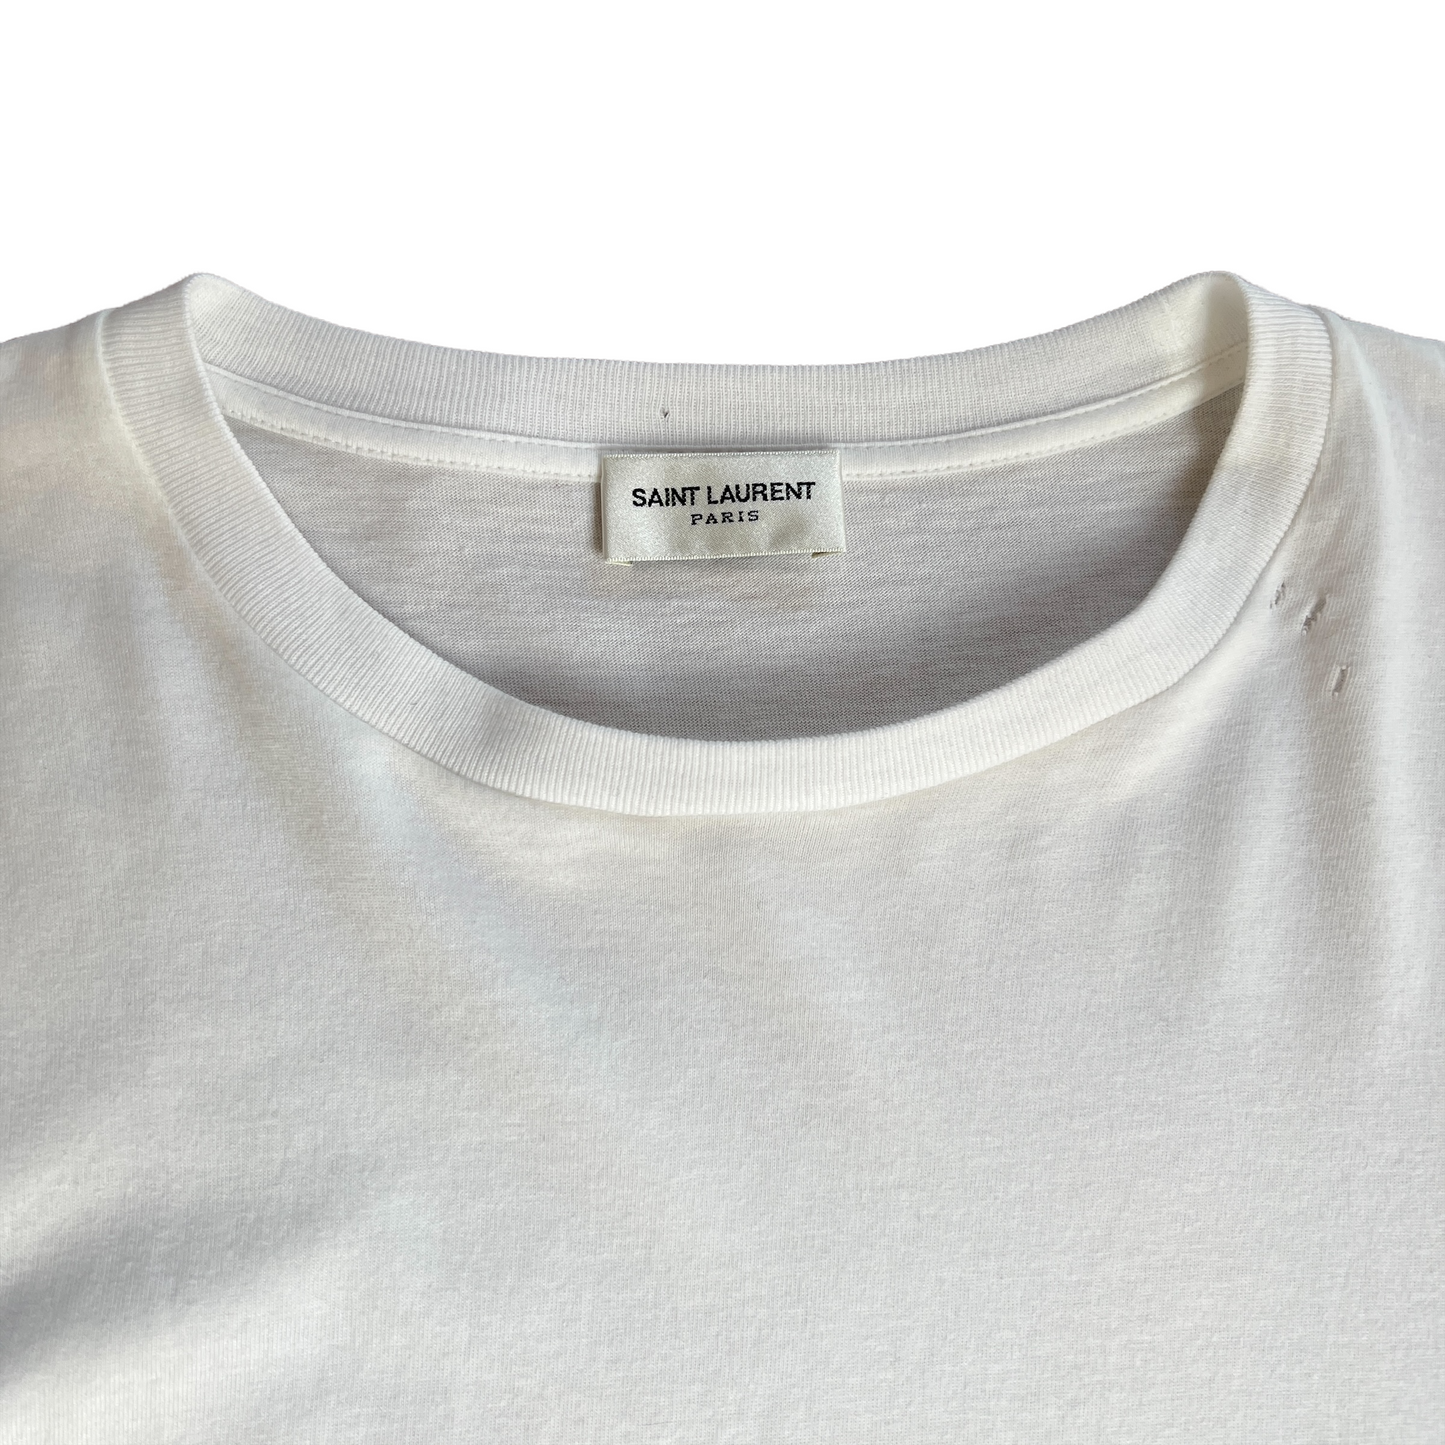 White Graphic Tshirt - XS